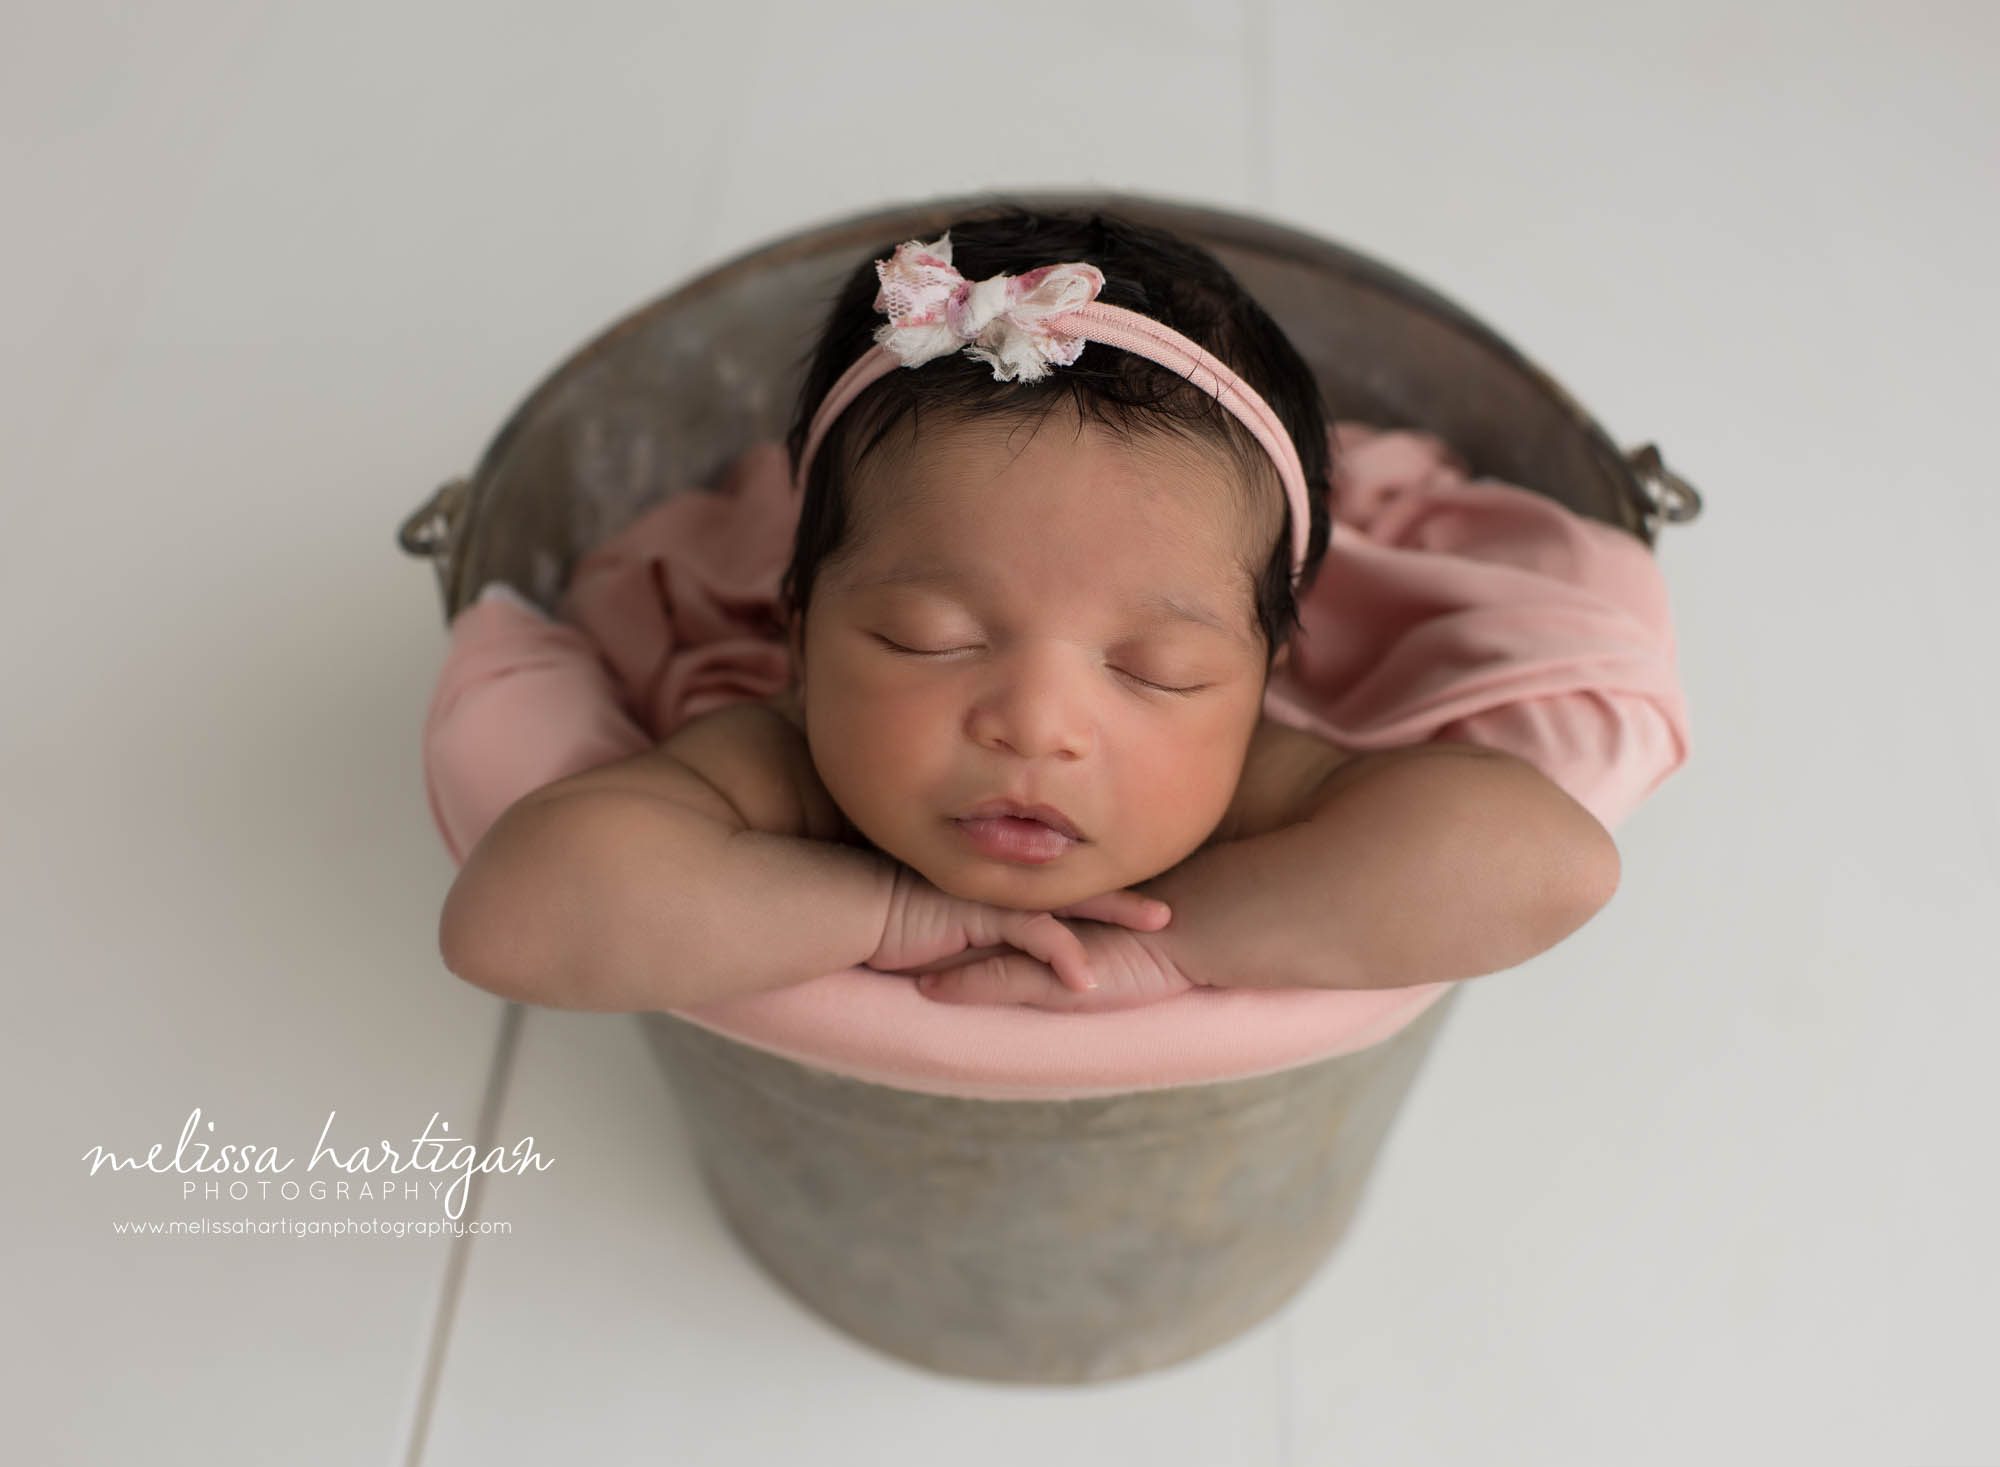 newbonr baby girl posed in metal bucket with pink and cream bow headband hamden CT newborn Photography